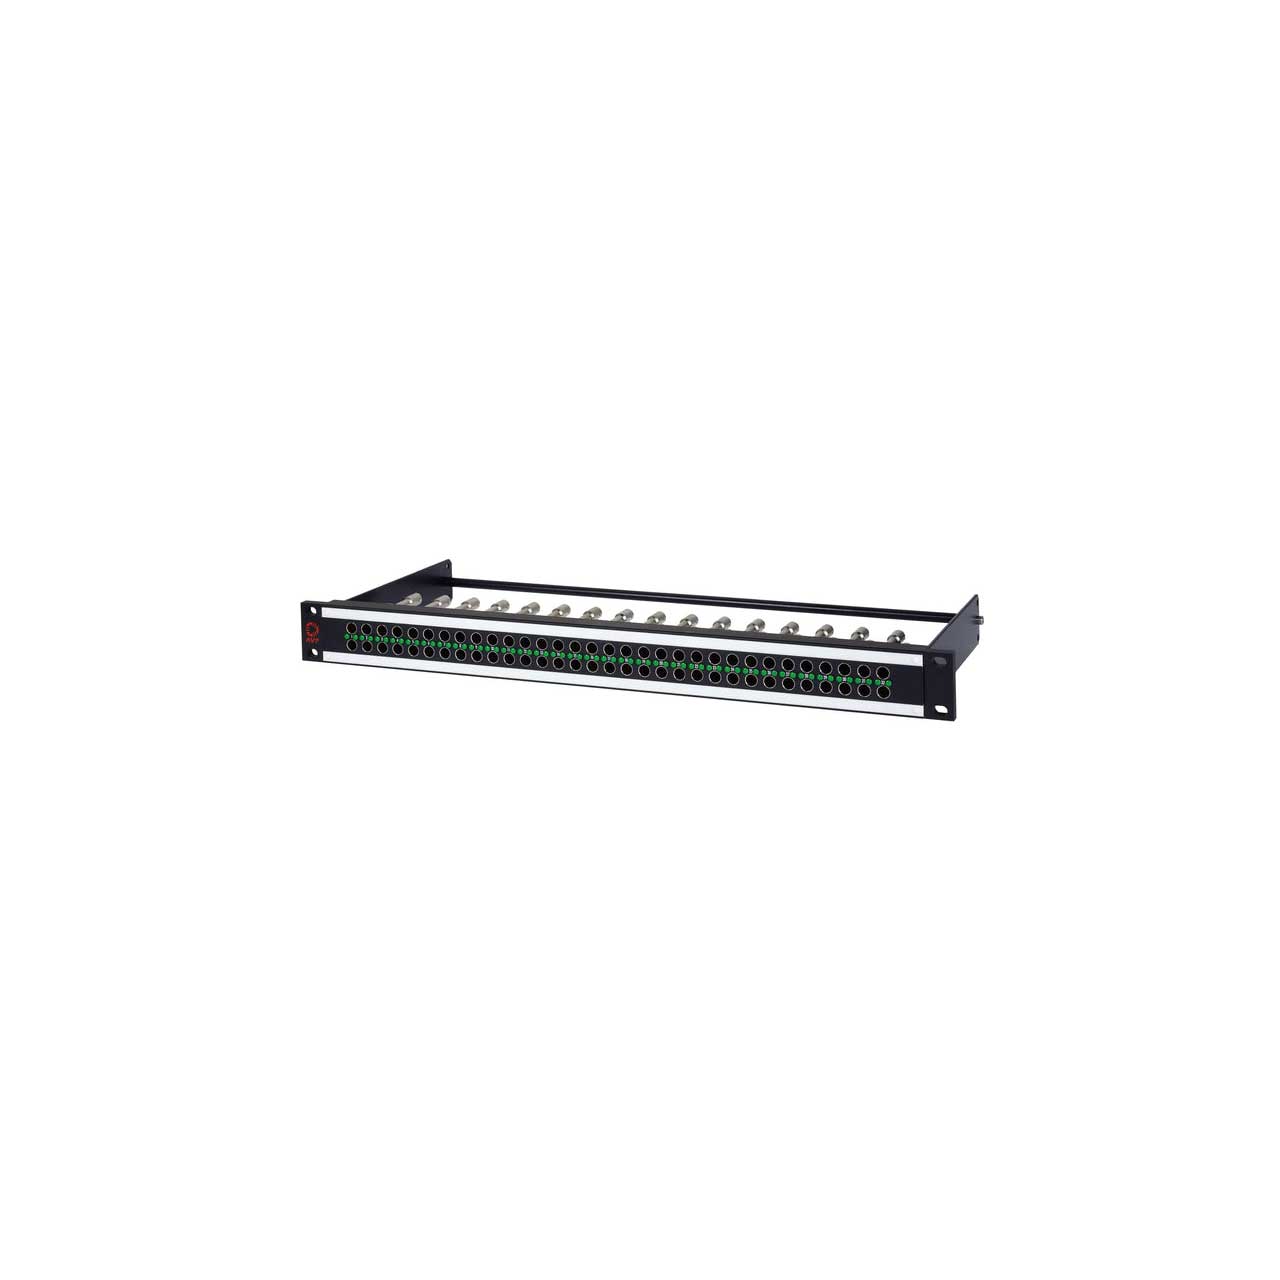 AVP AV-D232E1-AM75-B10 1 RU Midsize (Mini-WECO) Video Patch Panel - 2 x 32 - Non-Normaled - Terminating w/ Cable Bar AV-D232E1-AM75-B10